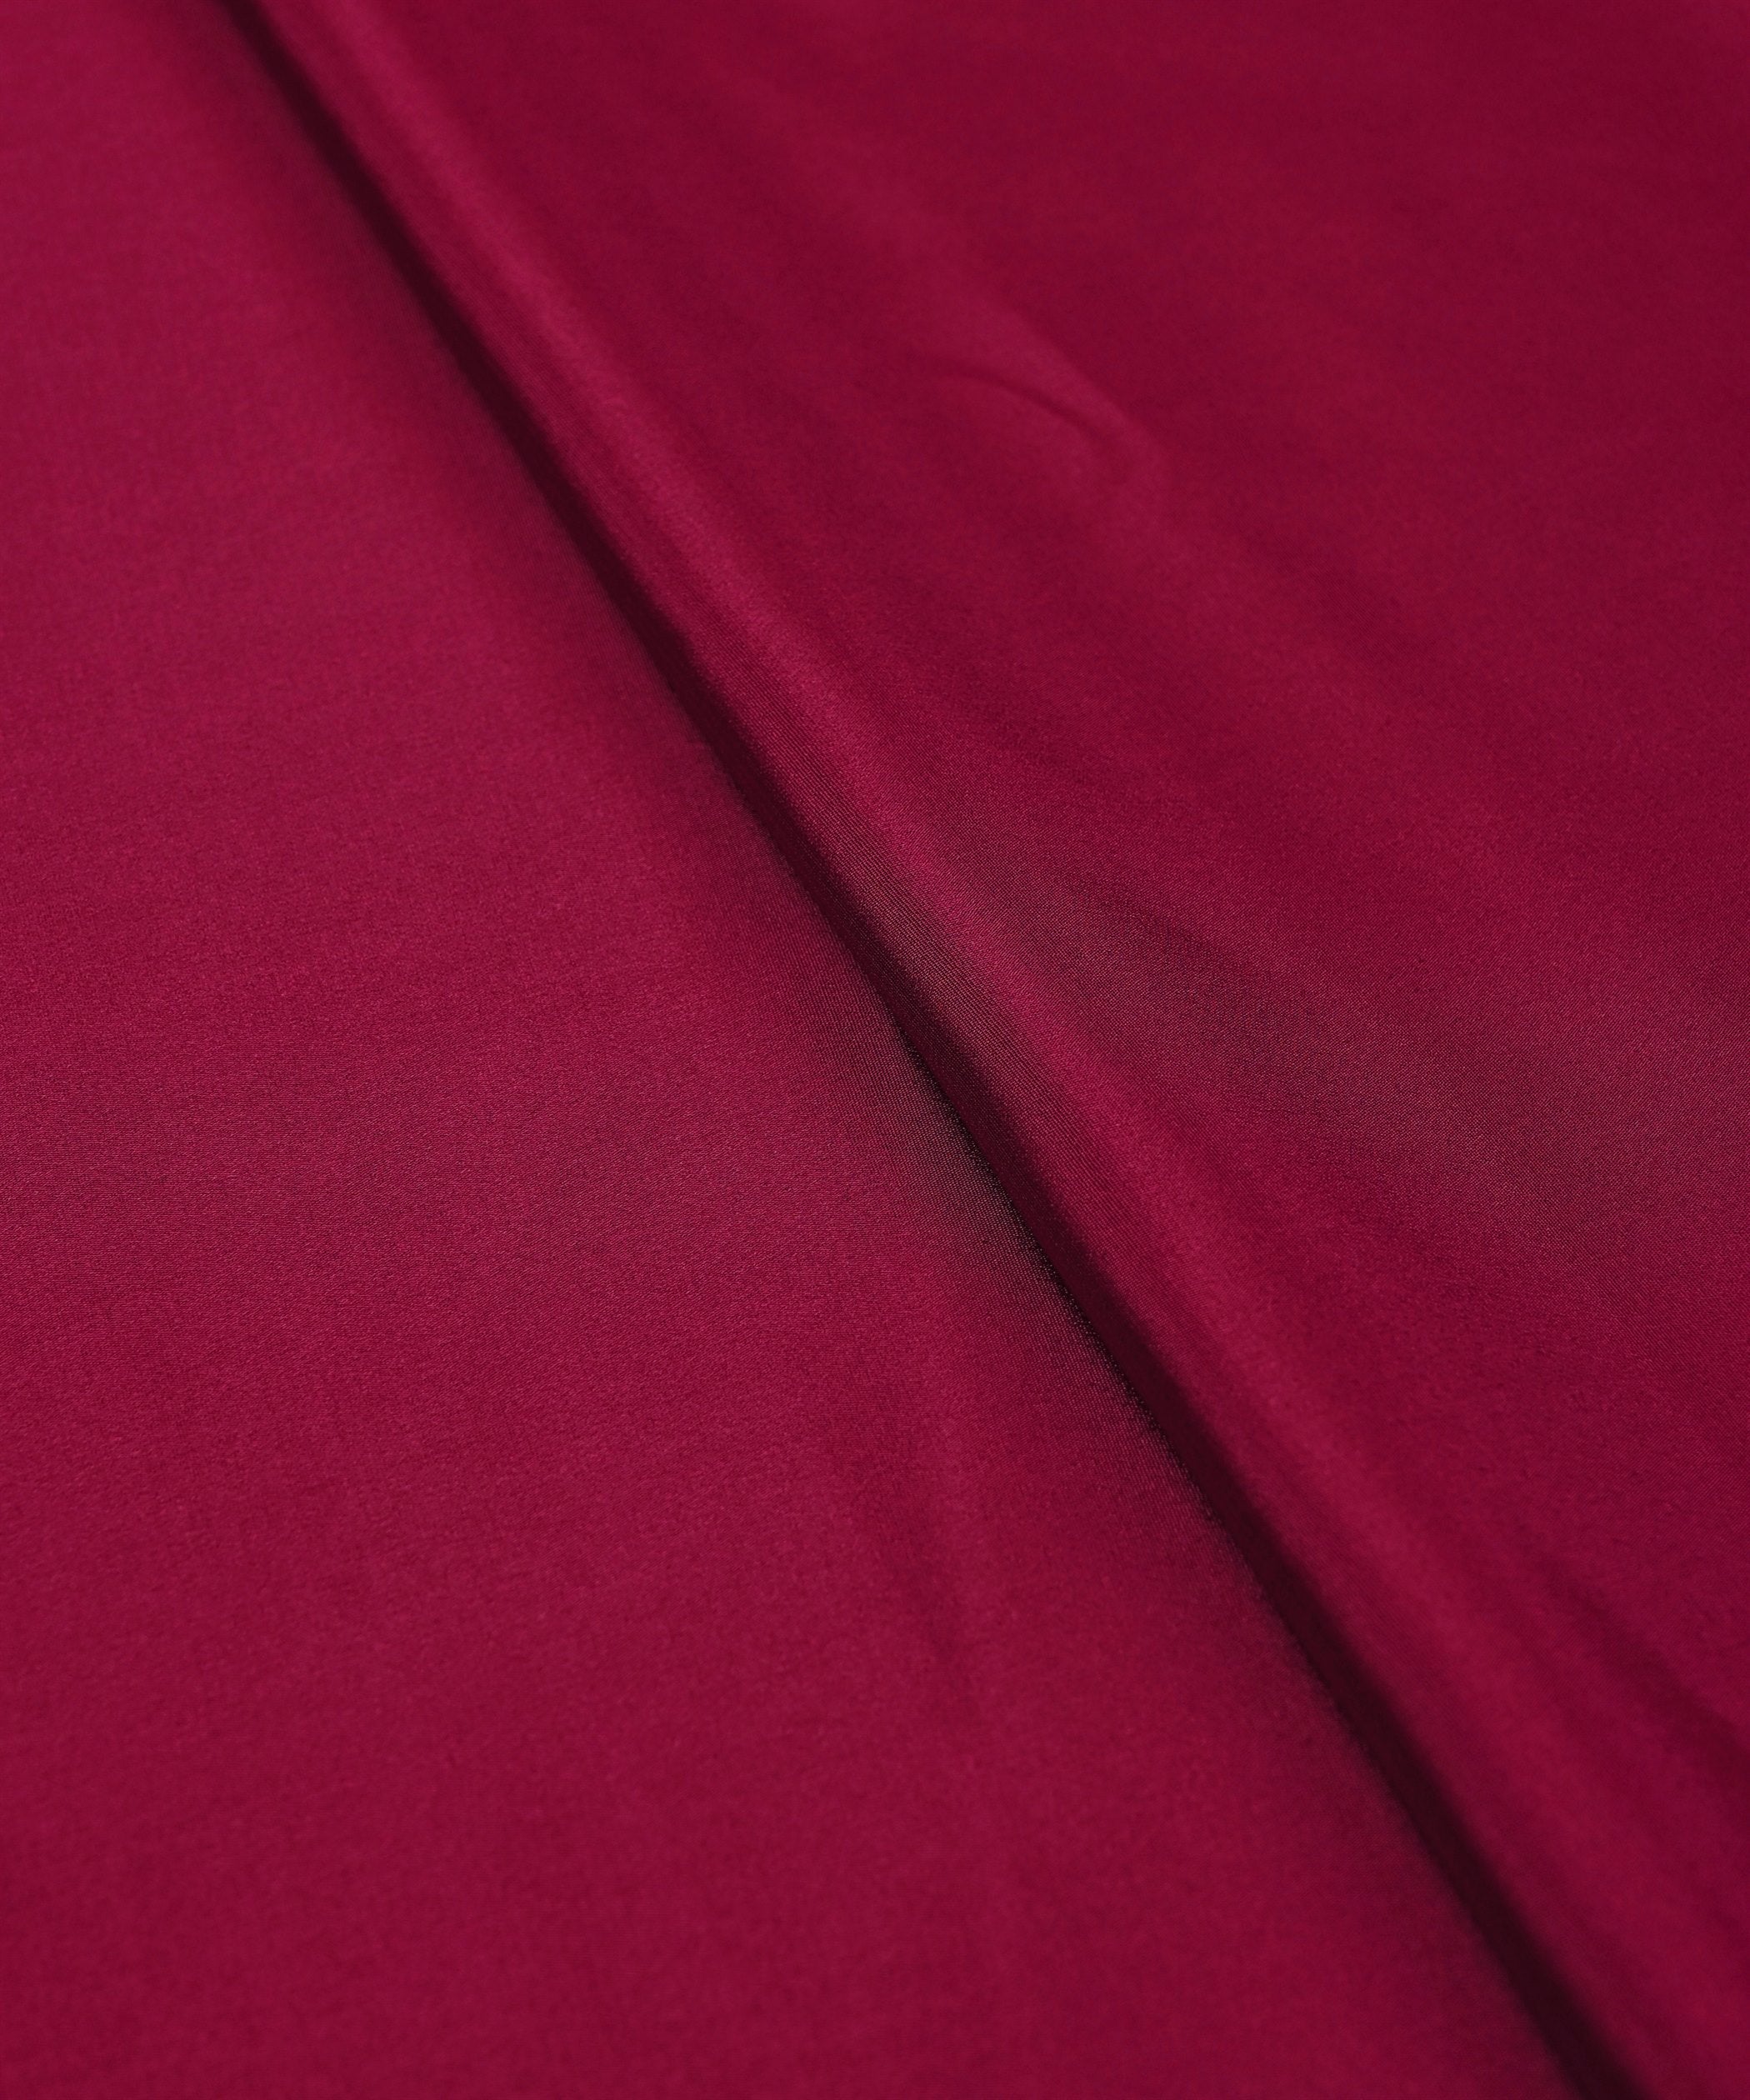 Dark Maroon Plain Dyed Crepe Fabric